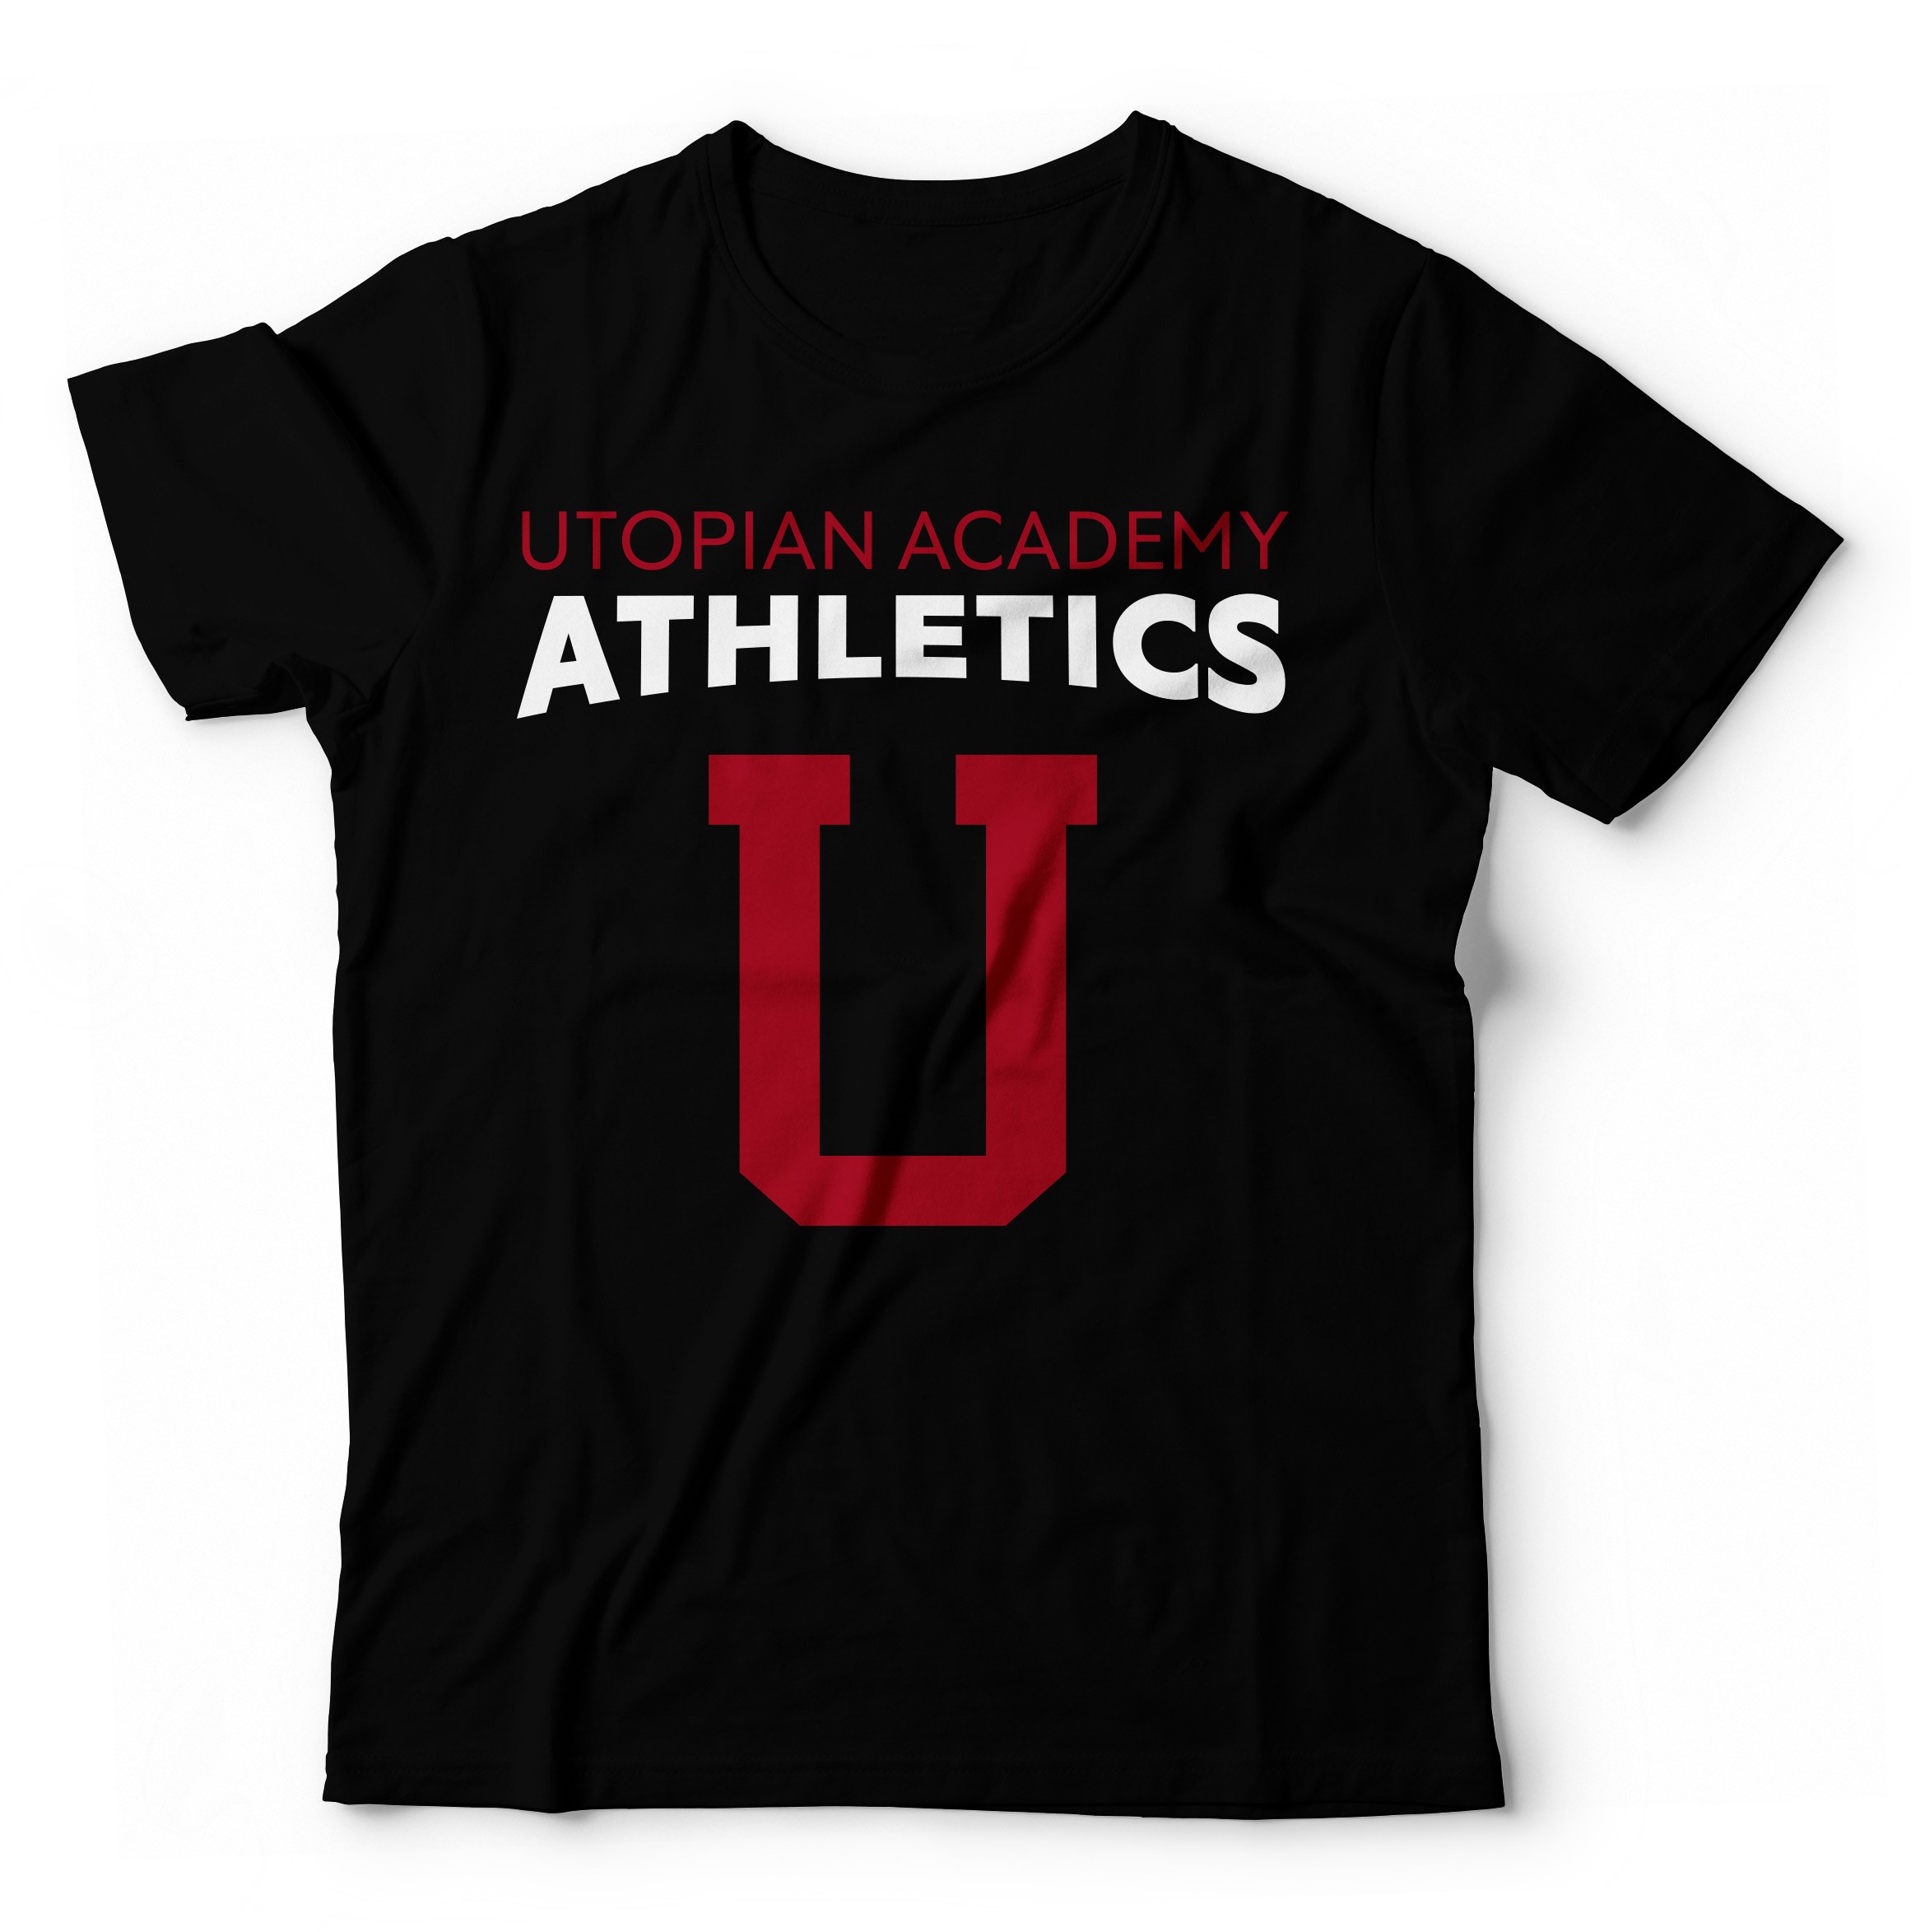 Utopian Athletics “U”